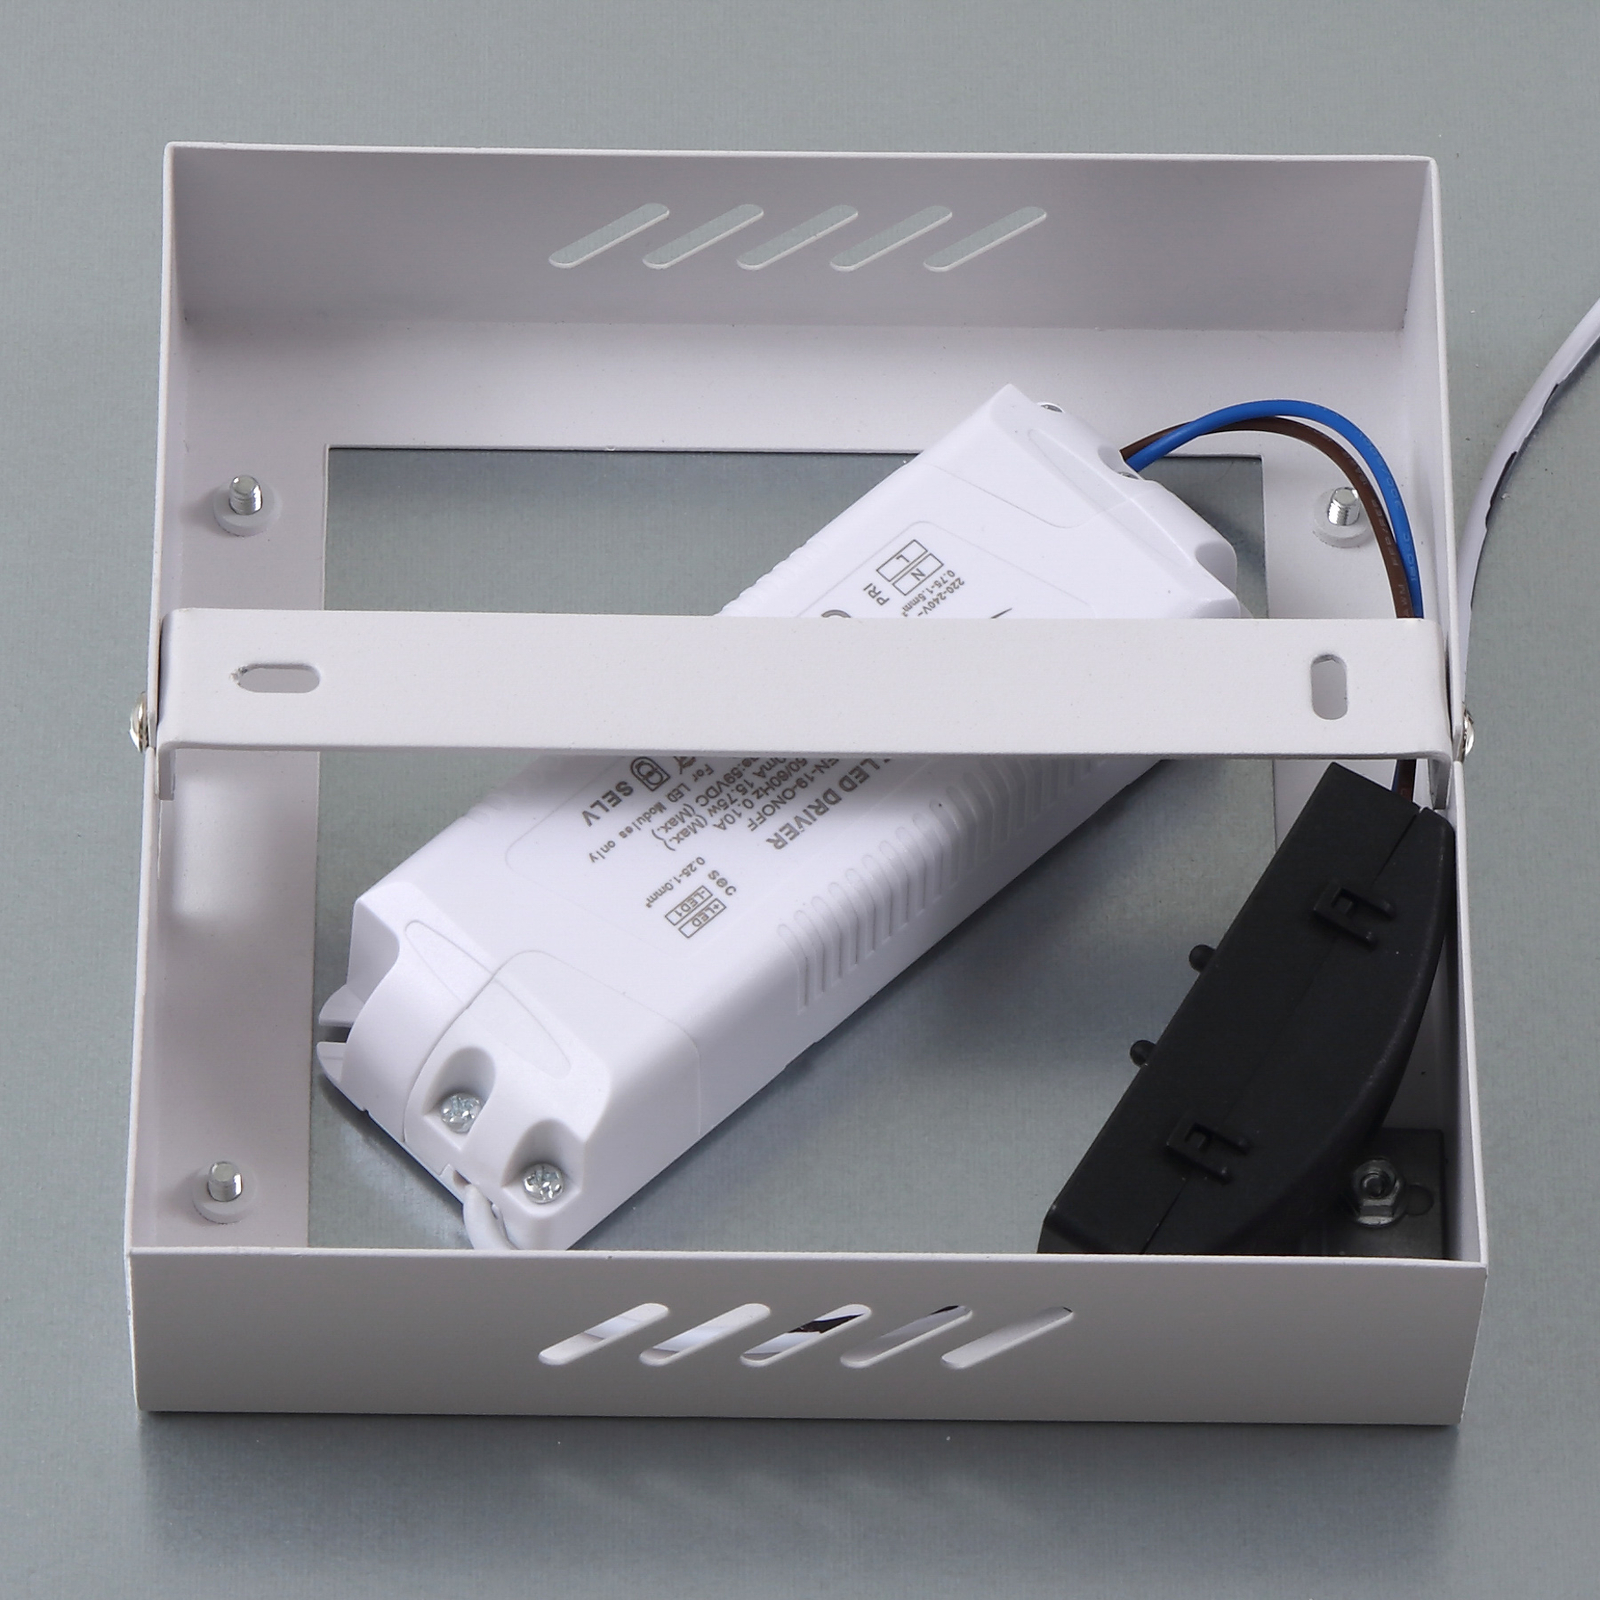 Lindby LED-panel Enhife, hvid, 29,5 x 29,5 cm, aluminium